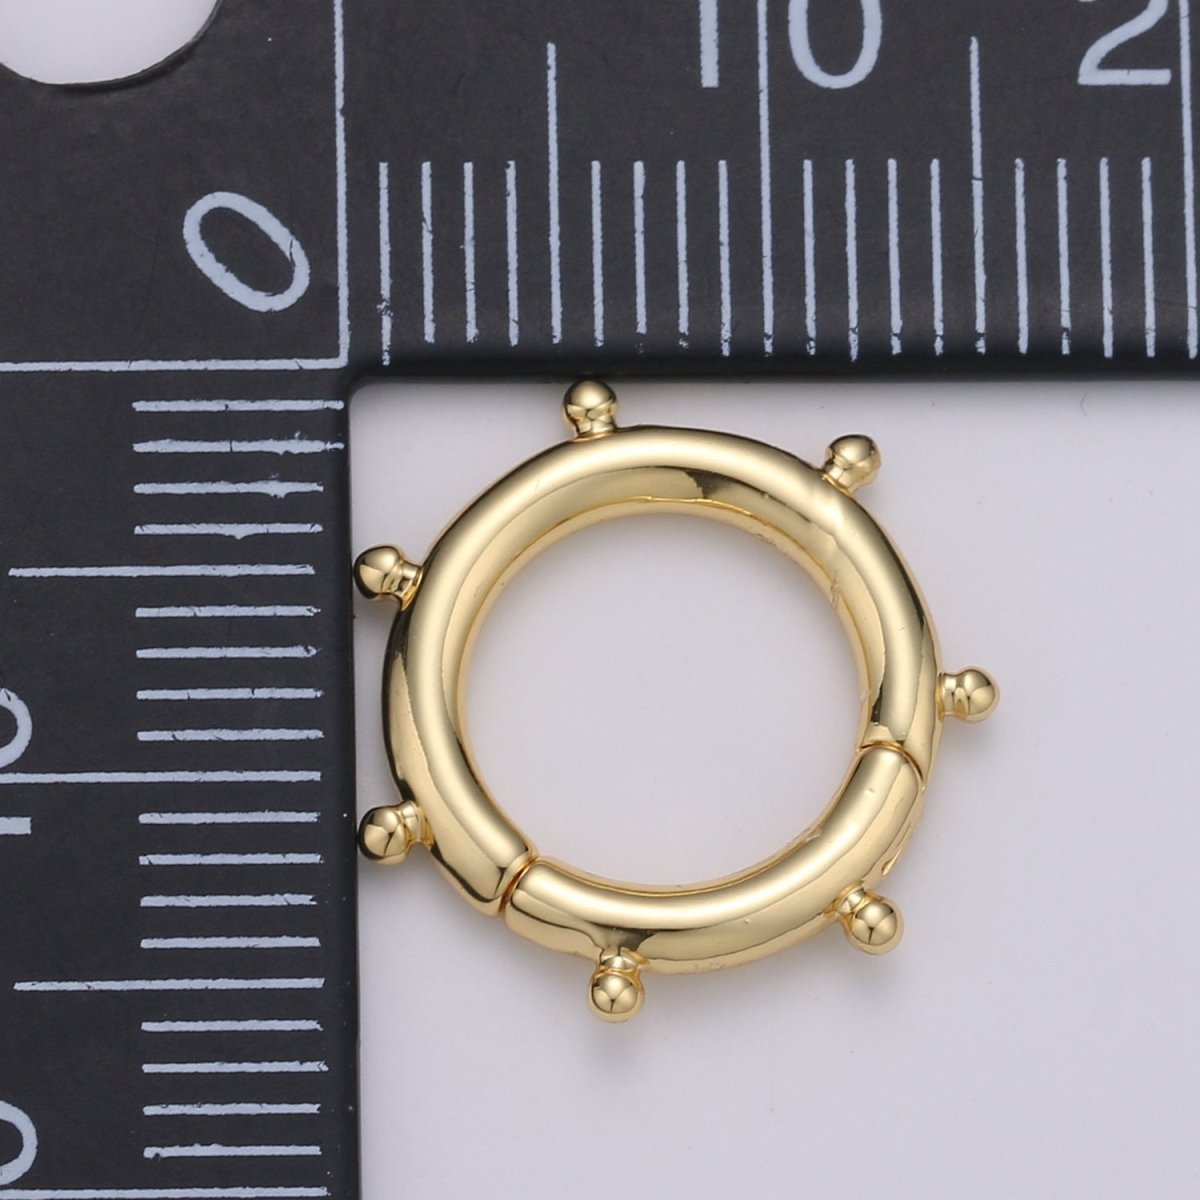 Nautical Gold Spirng Gate Ring, Gold Filled Pull Gate Ring, Ferris Wheel Gold Filled Carabiner Clasp For Connector Wristlet Holder L-092 - DLUXCA